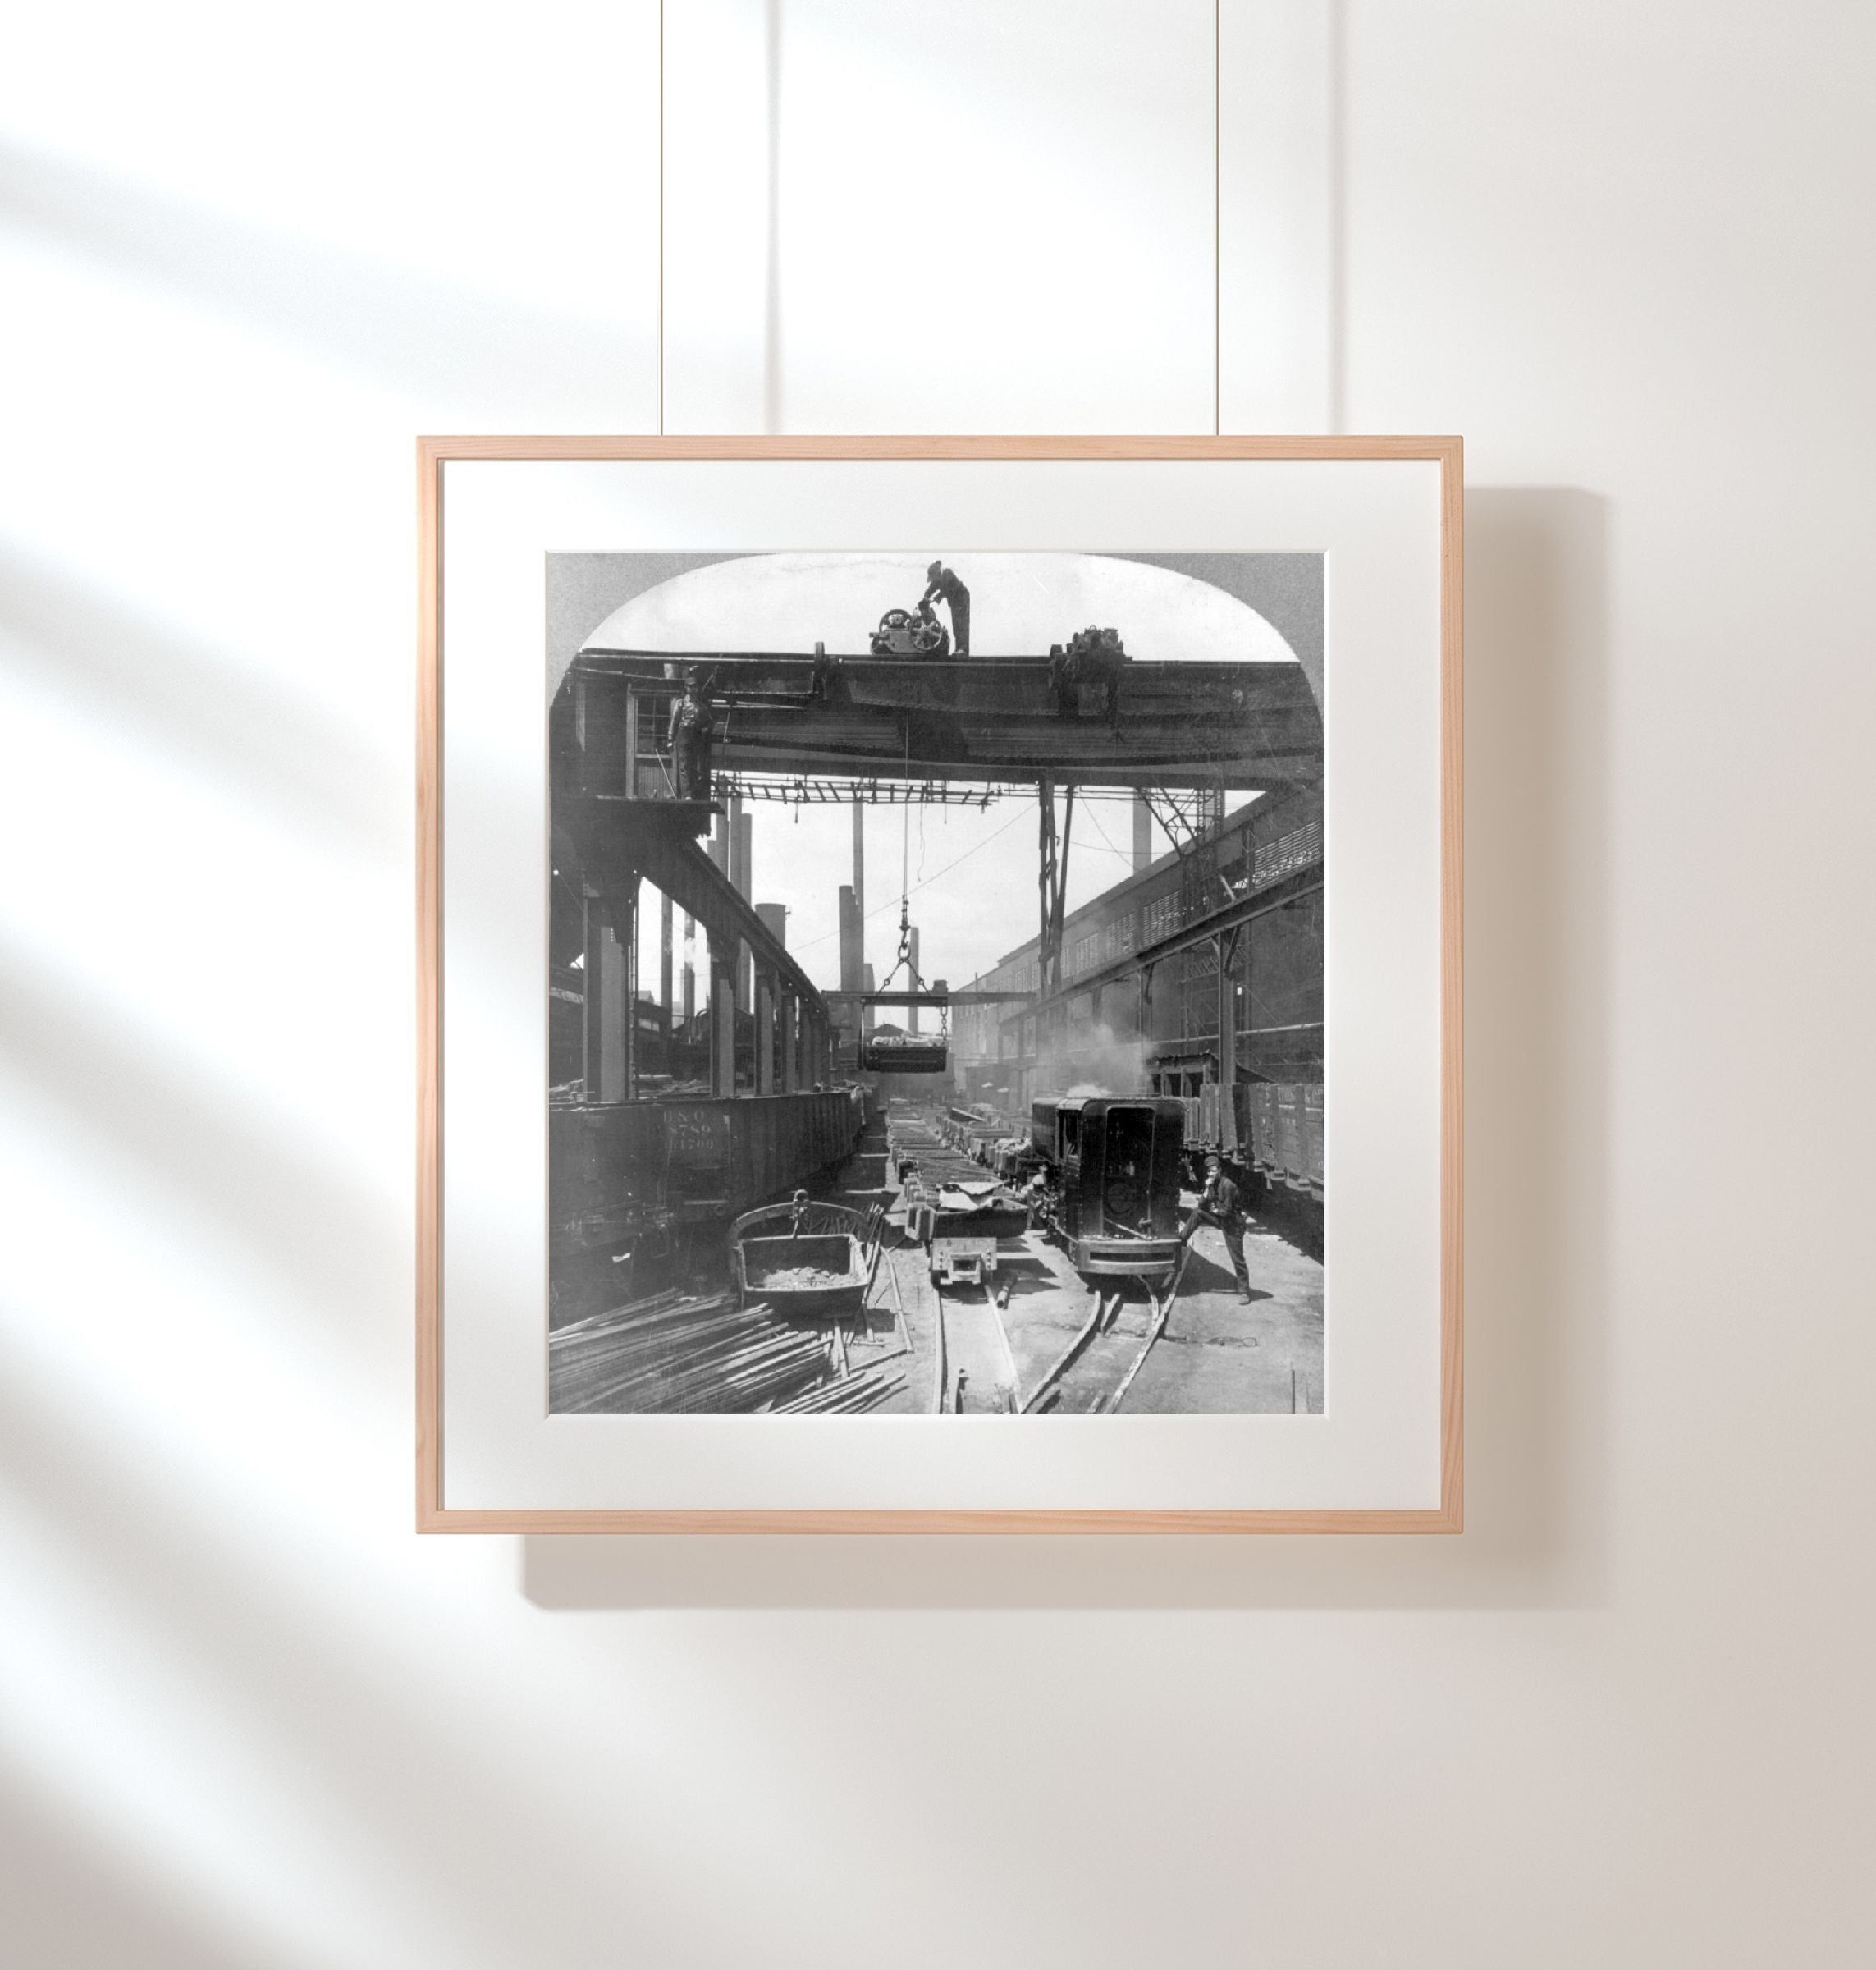 1905 Photo Large cranes handling finishe steel products: loading railroad cars,